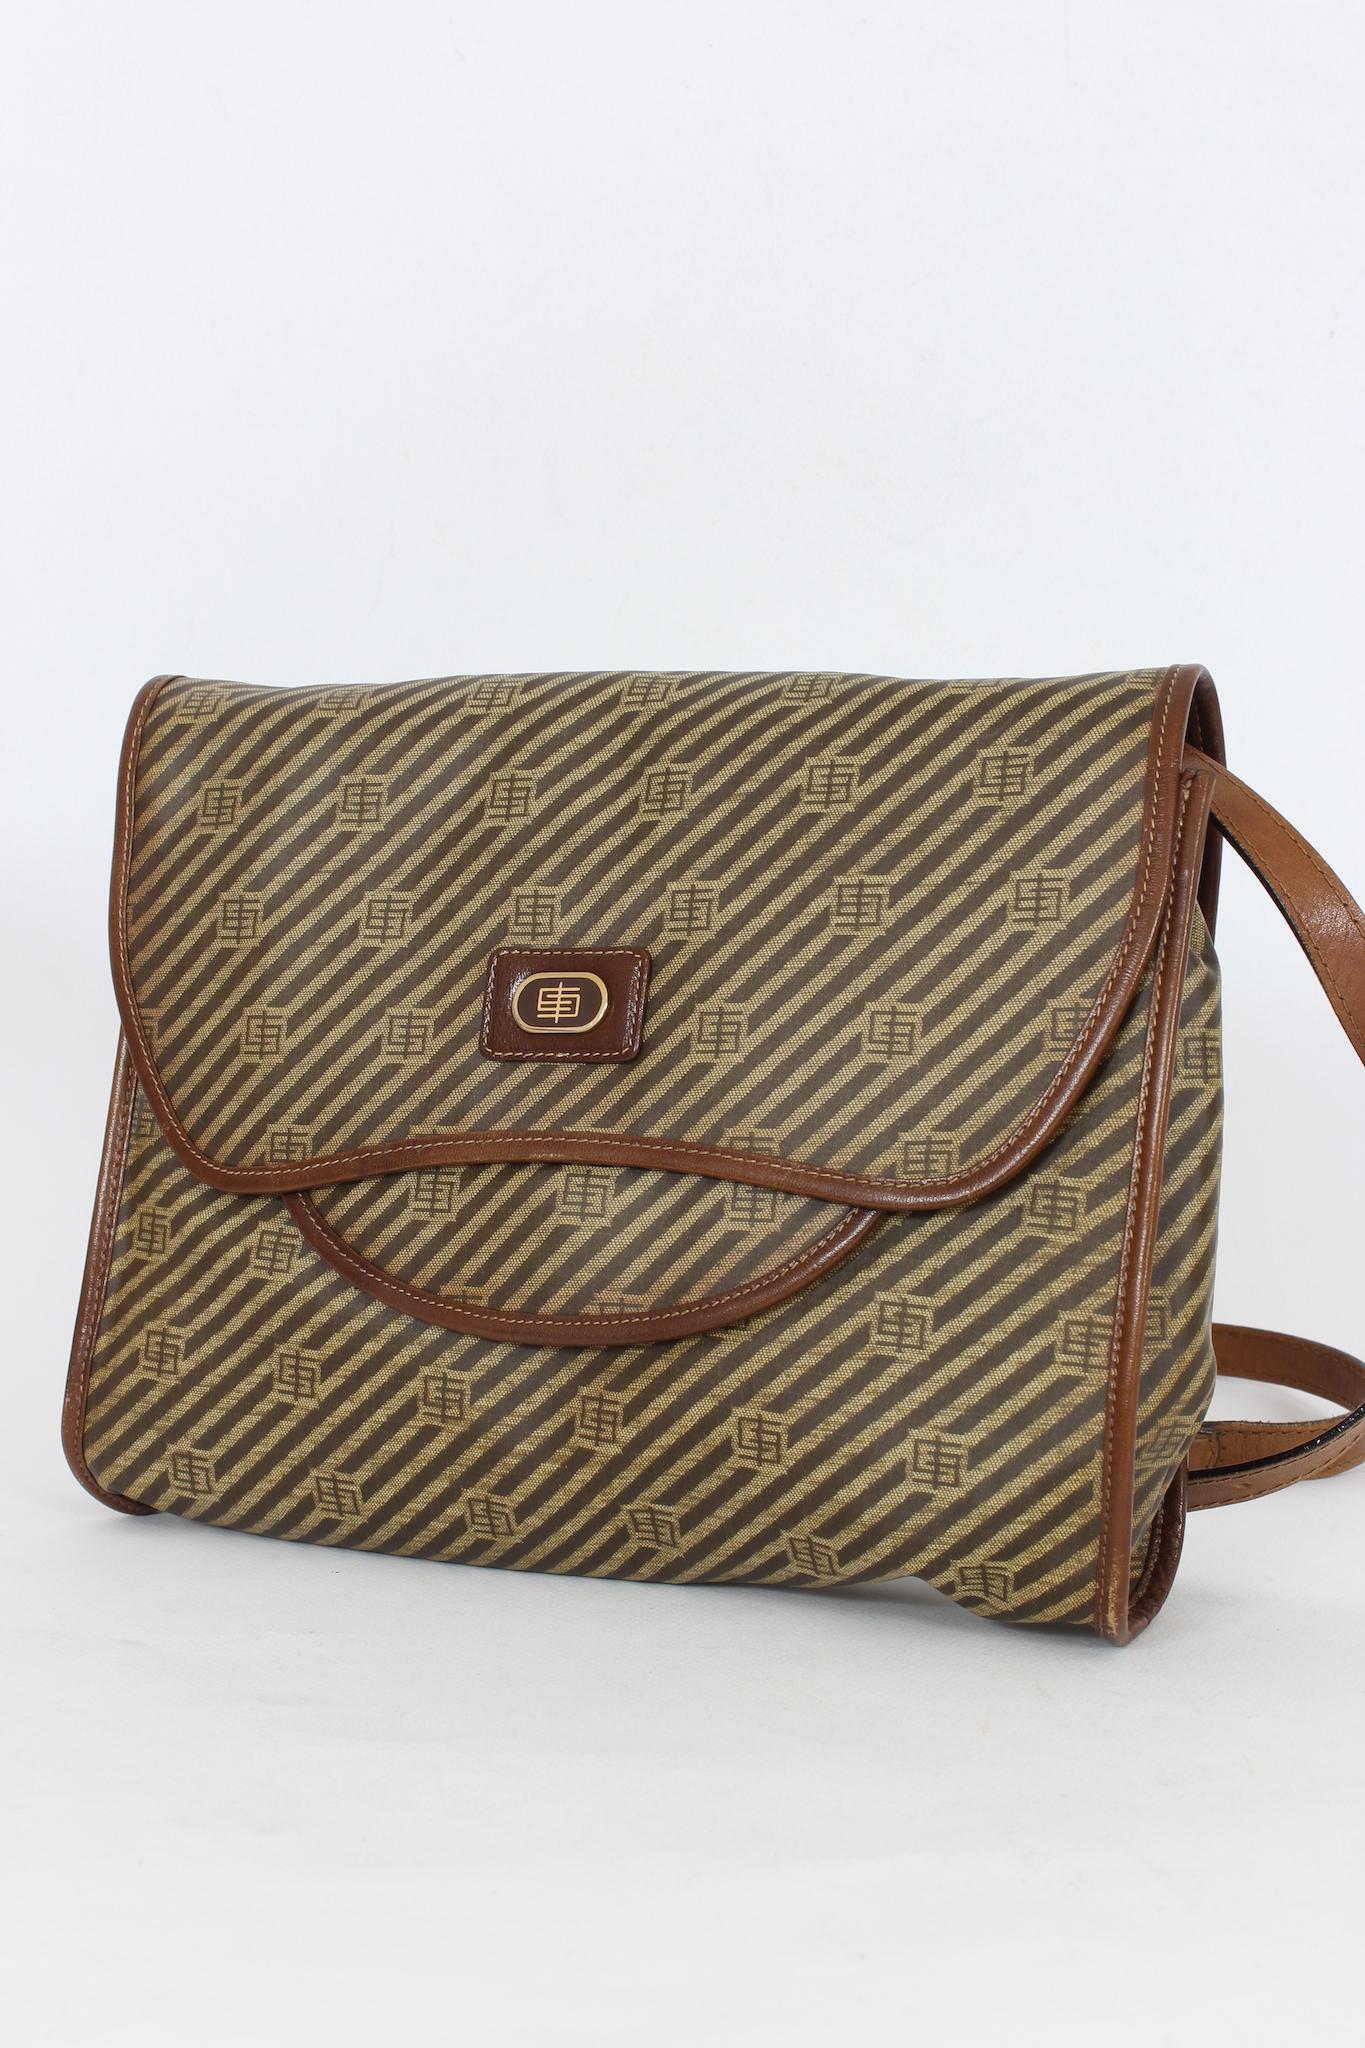 Emilio Pucci Beige Leather Monogram Vintage Shoulder Bag 80s 1